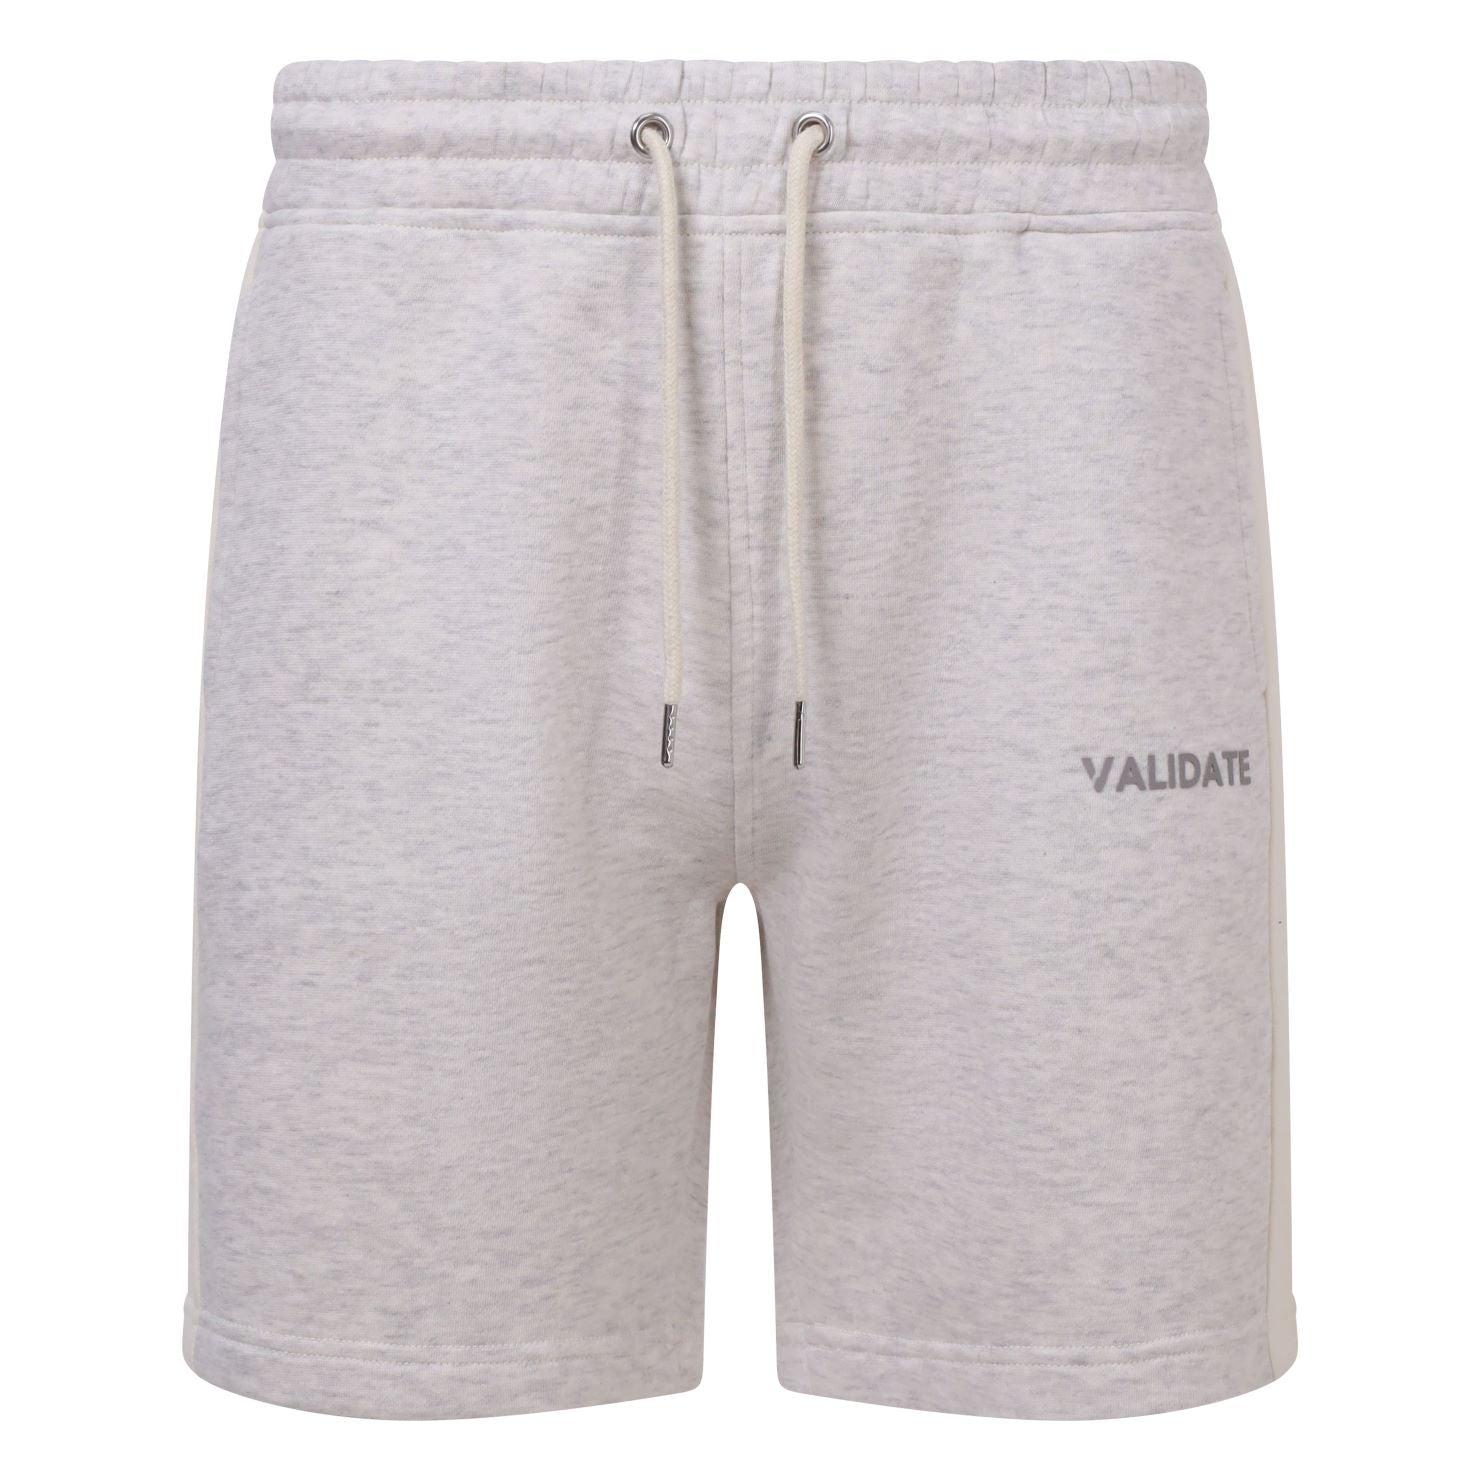 Validate Men's Colour Block Shorts Oatmeal Marl